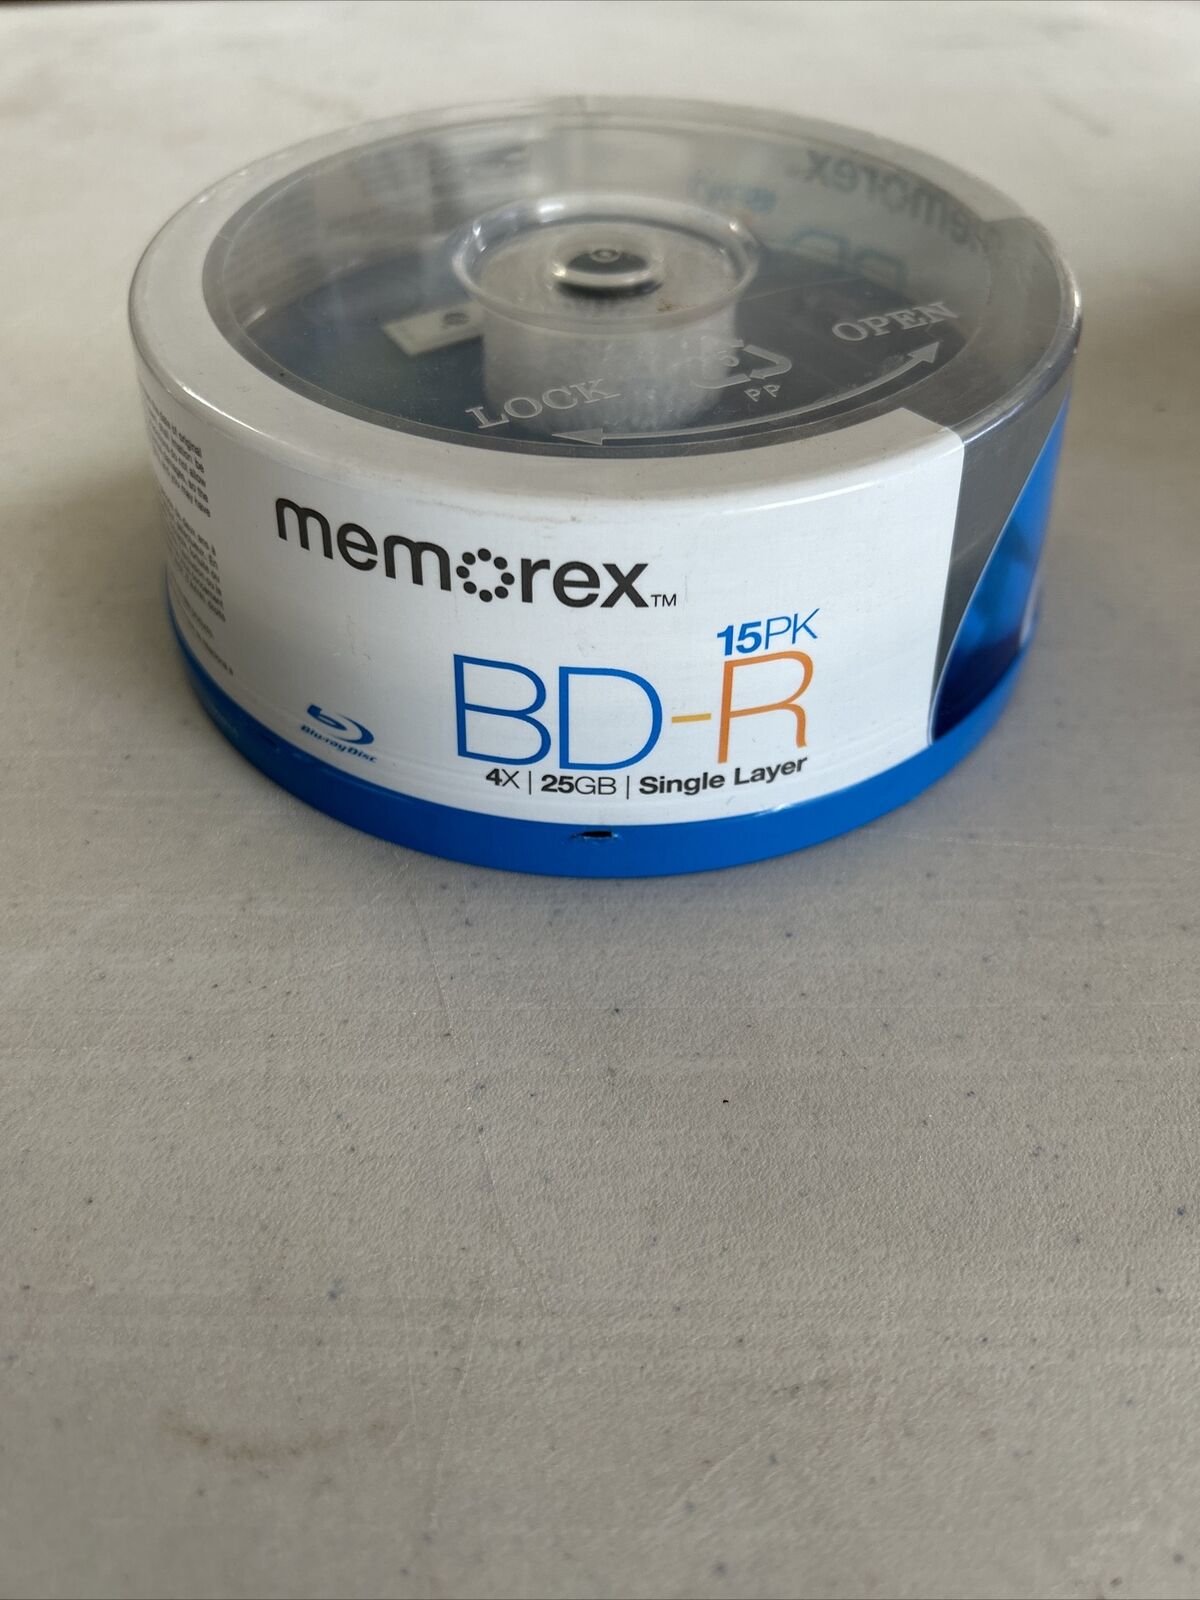 Memorex Blu-Ray BD-R 4 x 25GB  (15 Pack) Single Layer Disks